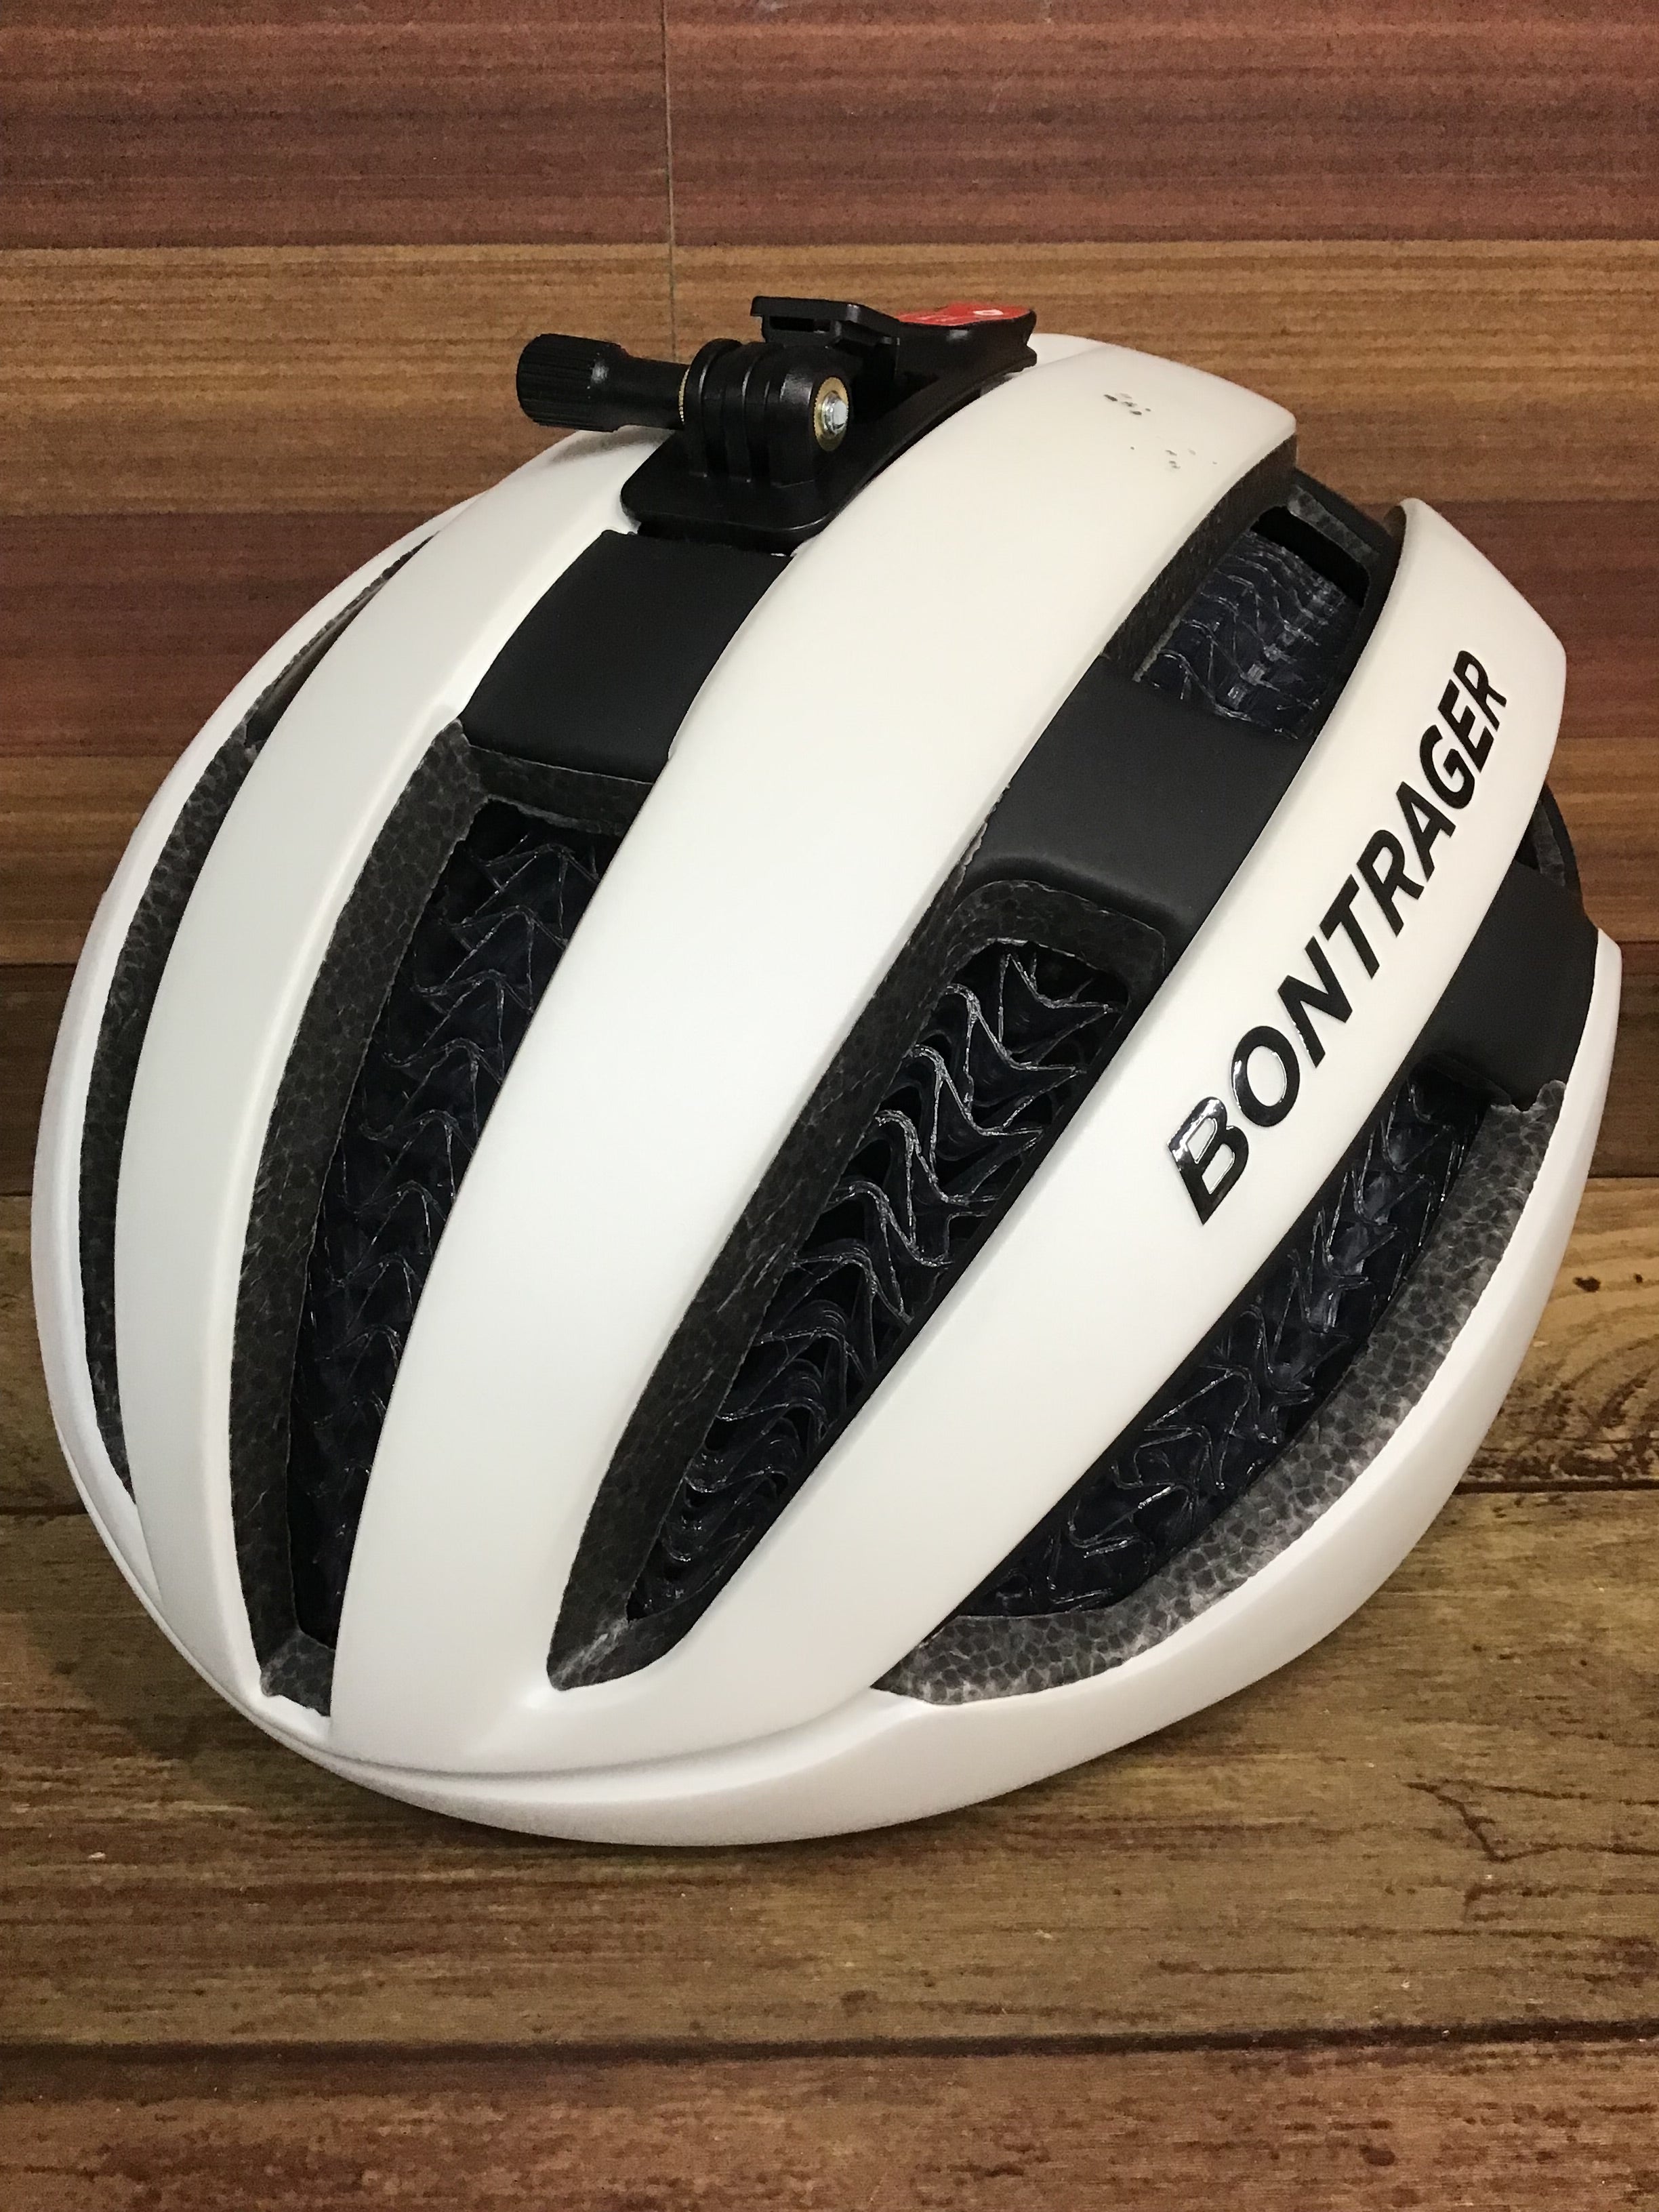 HD999 ボントレガー BONTRAGER CIRCUIT WAVE CELL ヘルメット Ｌ 2022/4製造 白